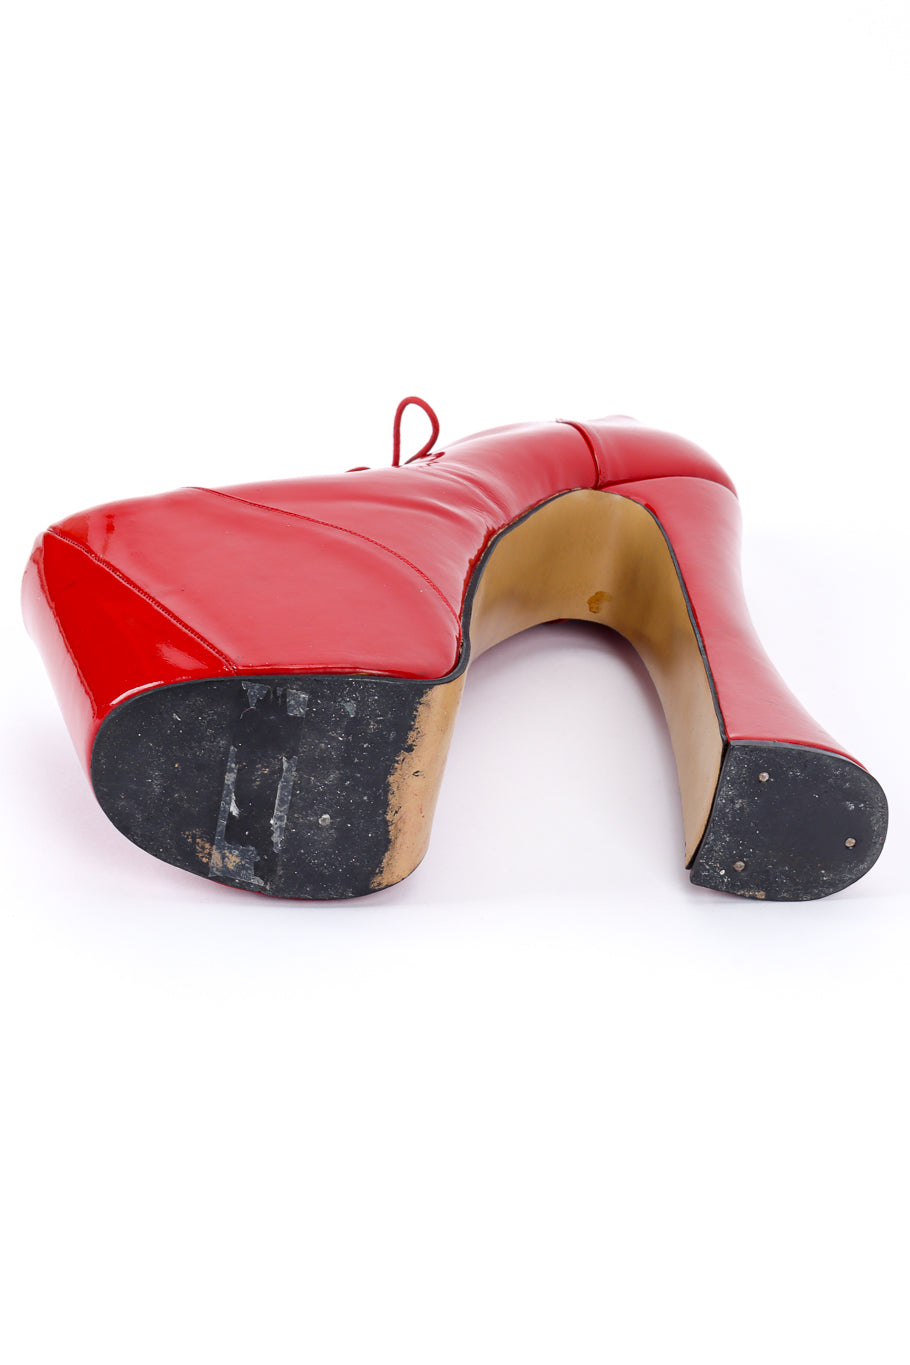 Vintage Vivienne Westwood 1993 F/W Patent Leather Super Elevated Ghillie Platforms right shoe outsole @recessla